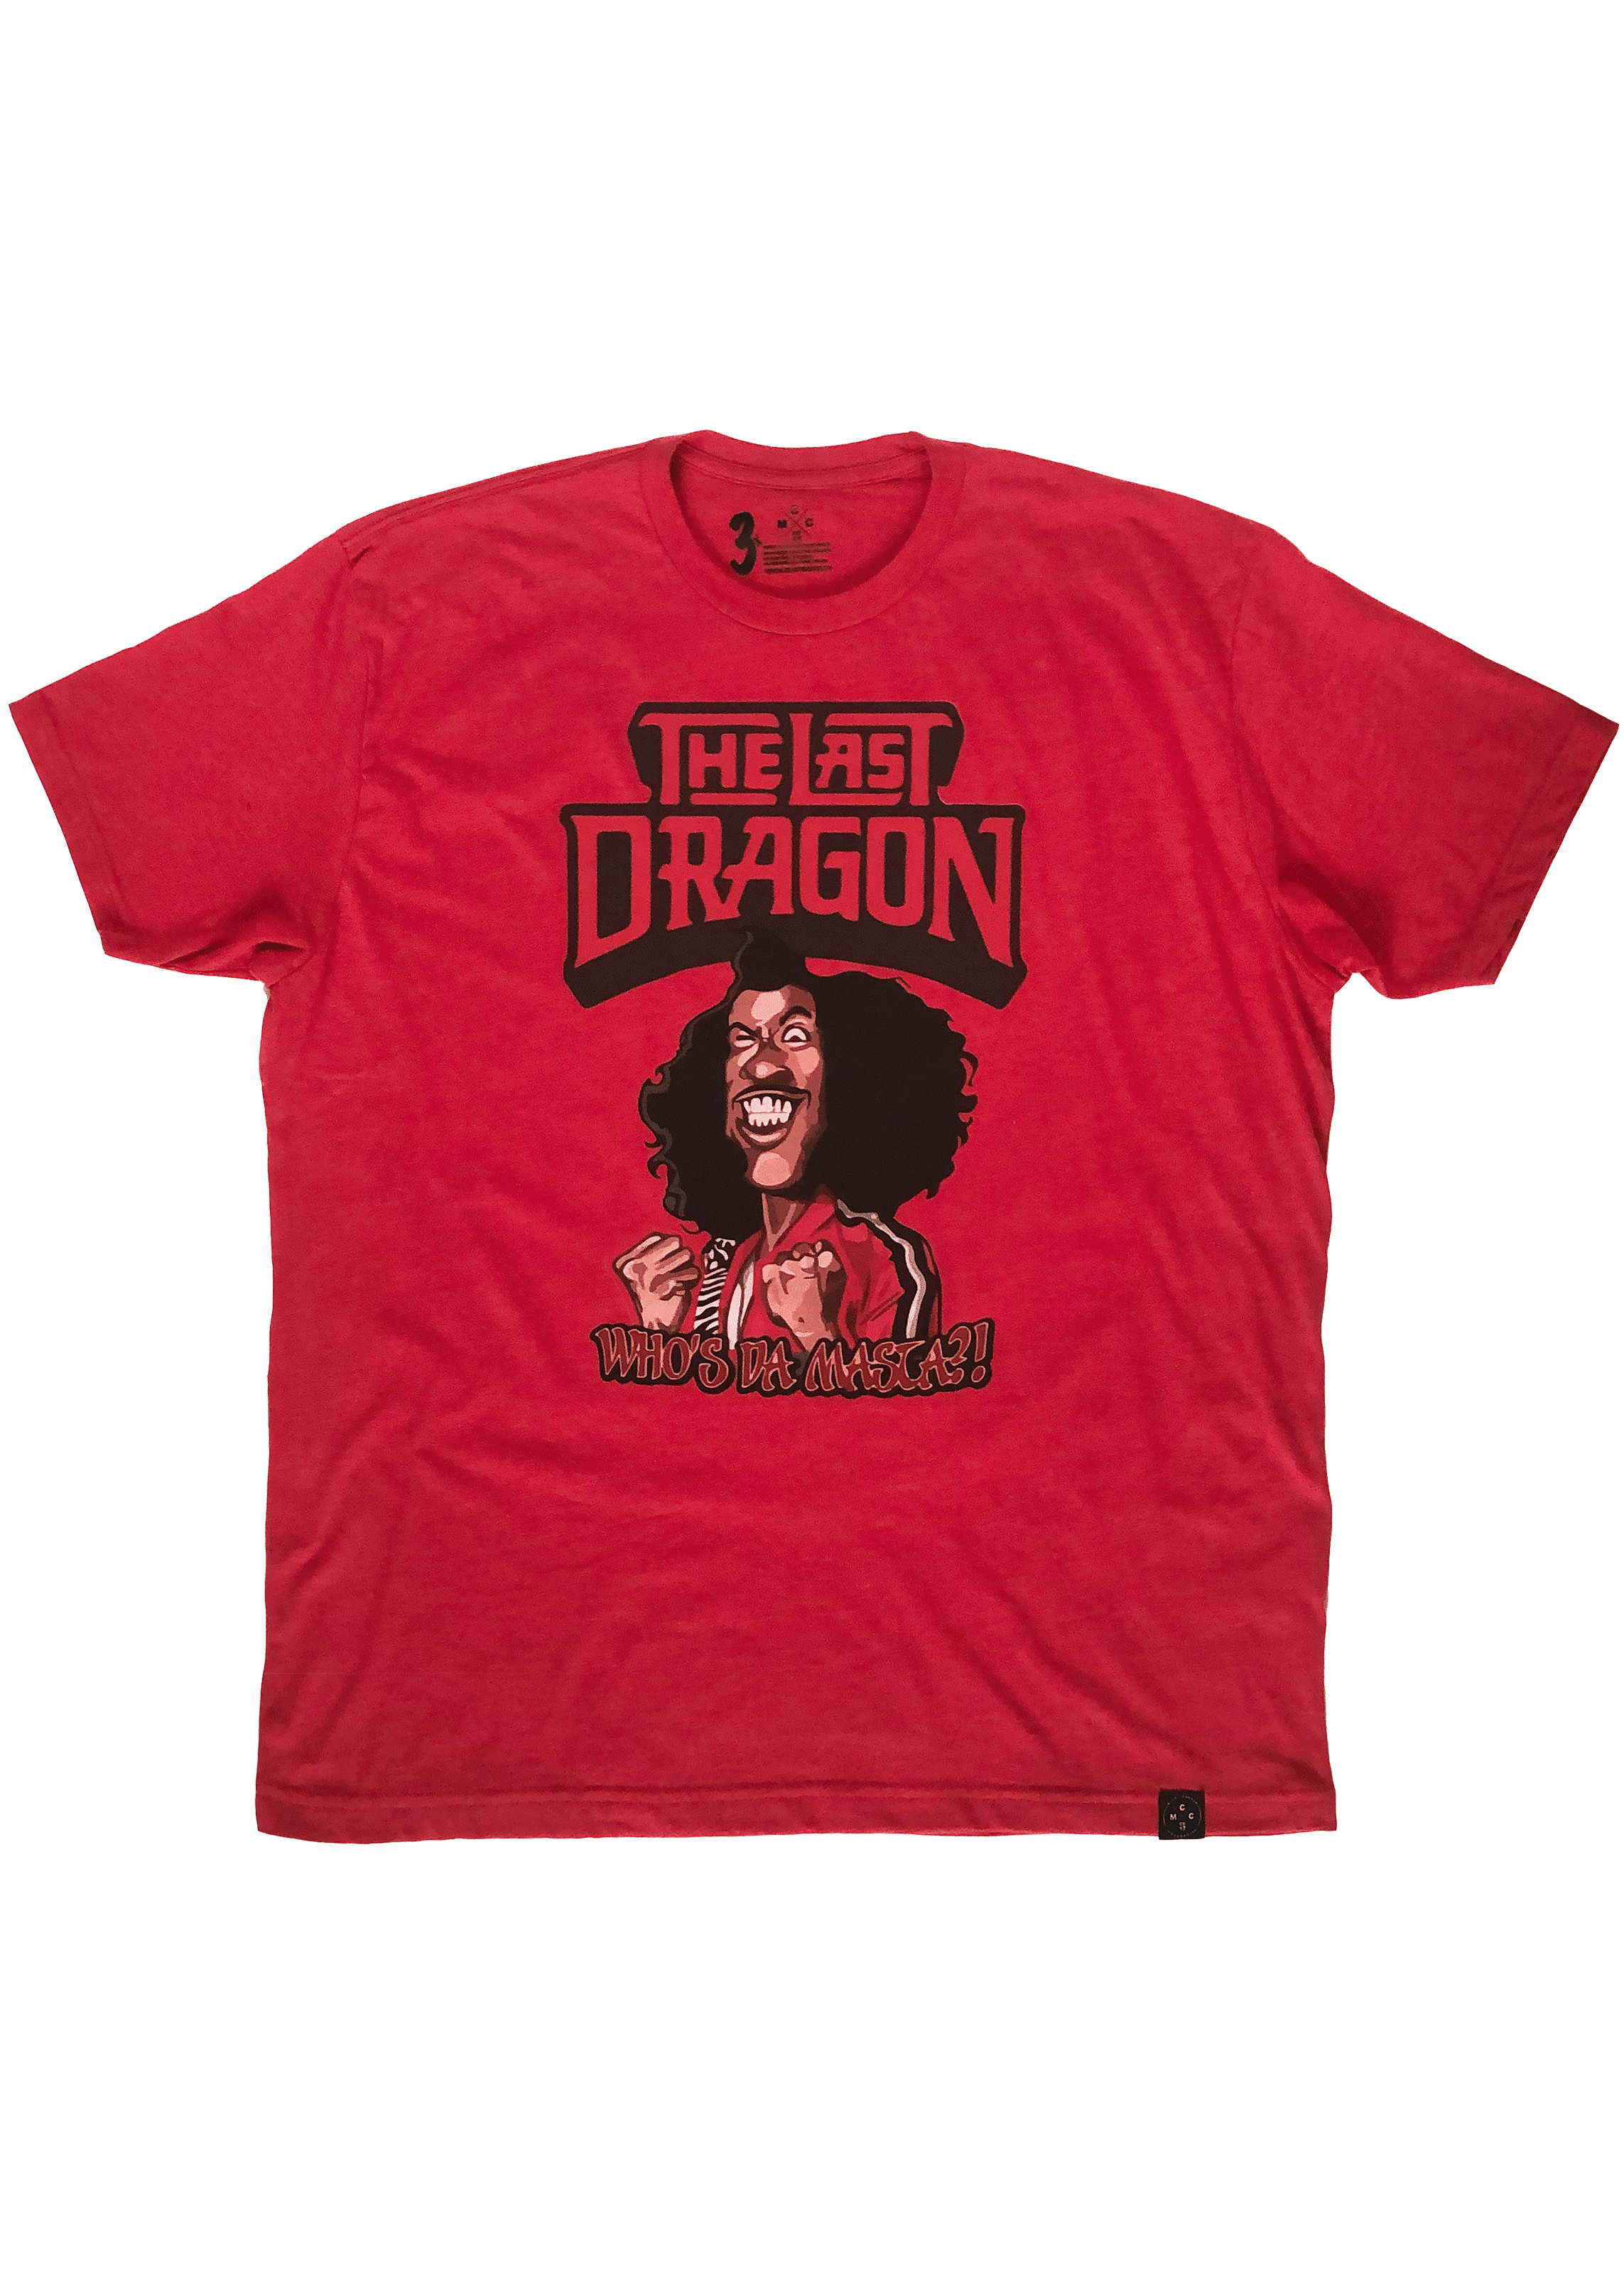 Miles Carter Designs Shirt S The Last Dragon Sho Nuff